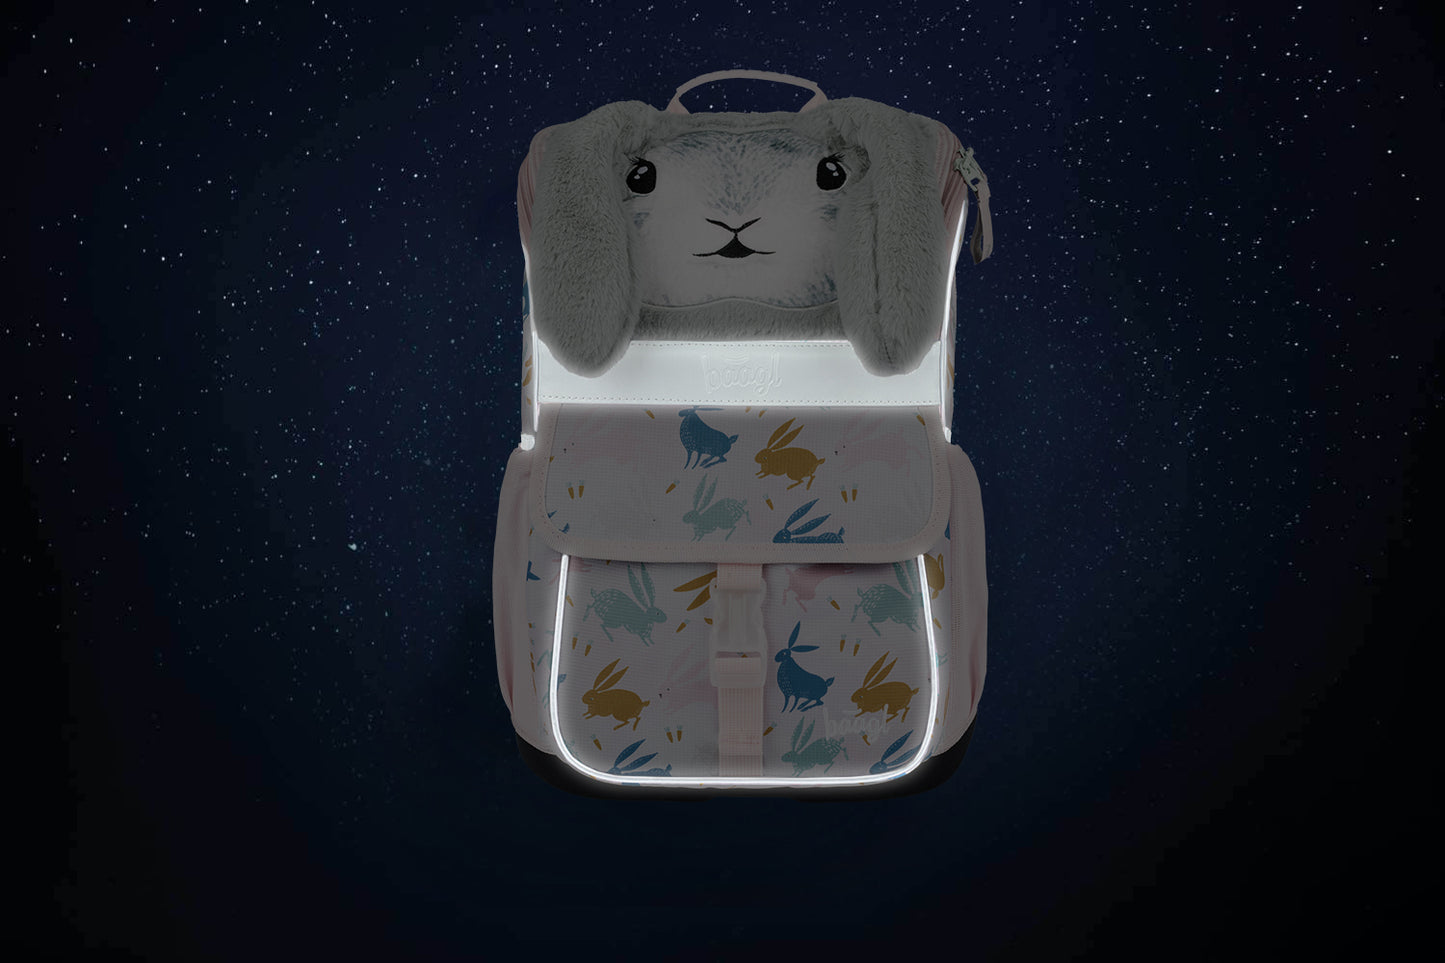 School bag Zippy Bunny